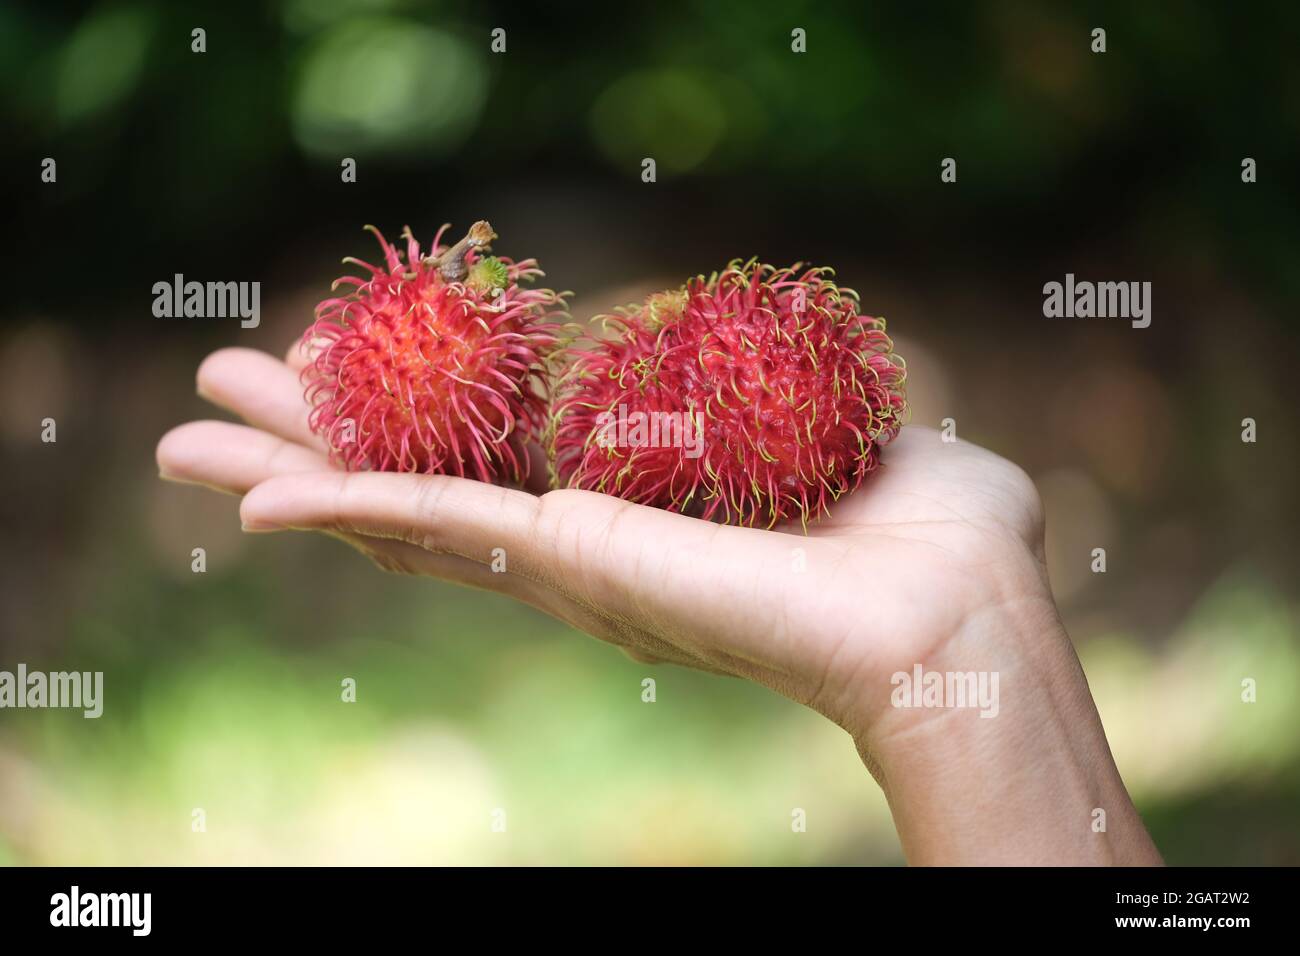 Indonesia Batam - Rambutan Fruits - Nephelium lappaceum Foto Stock